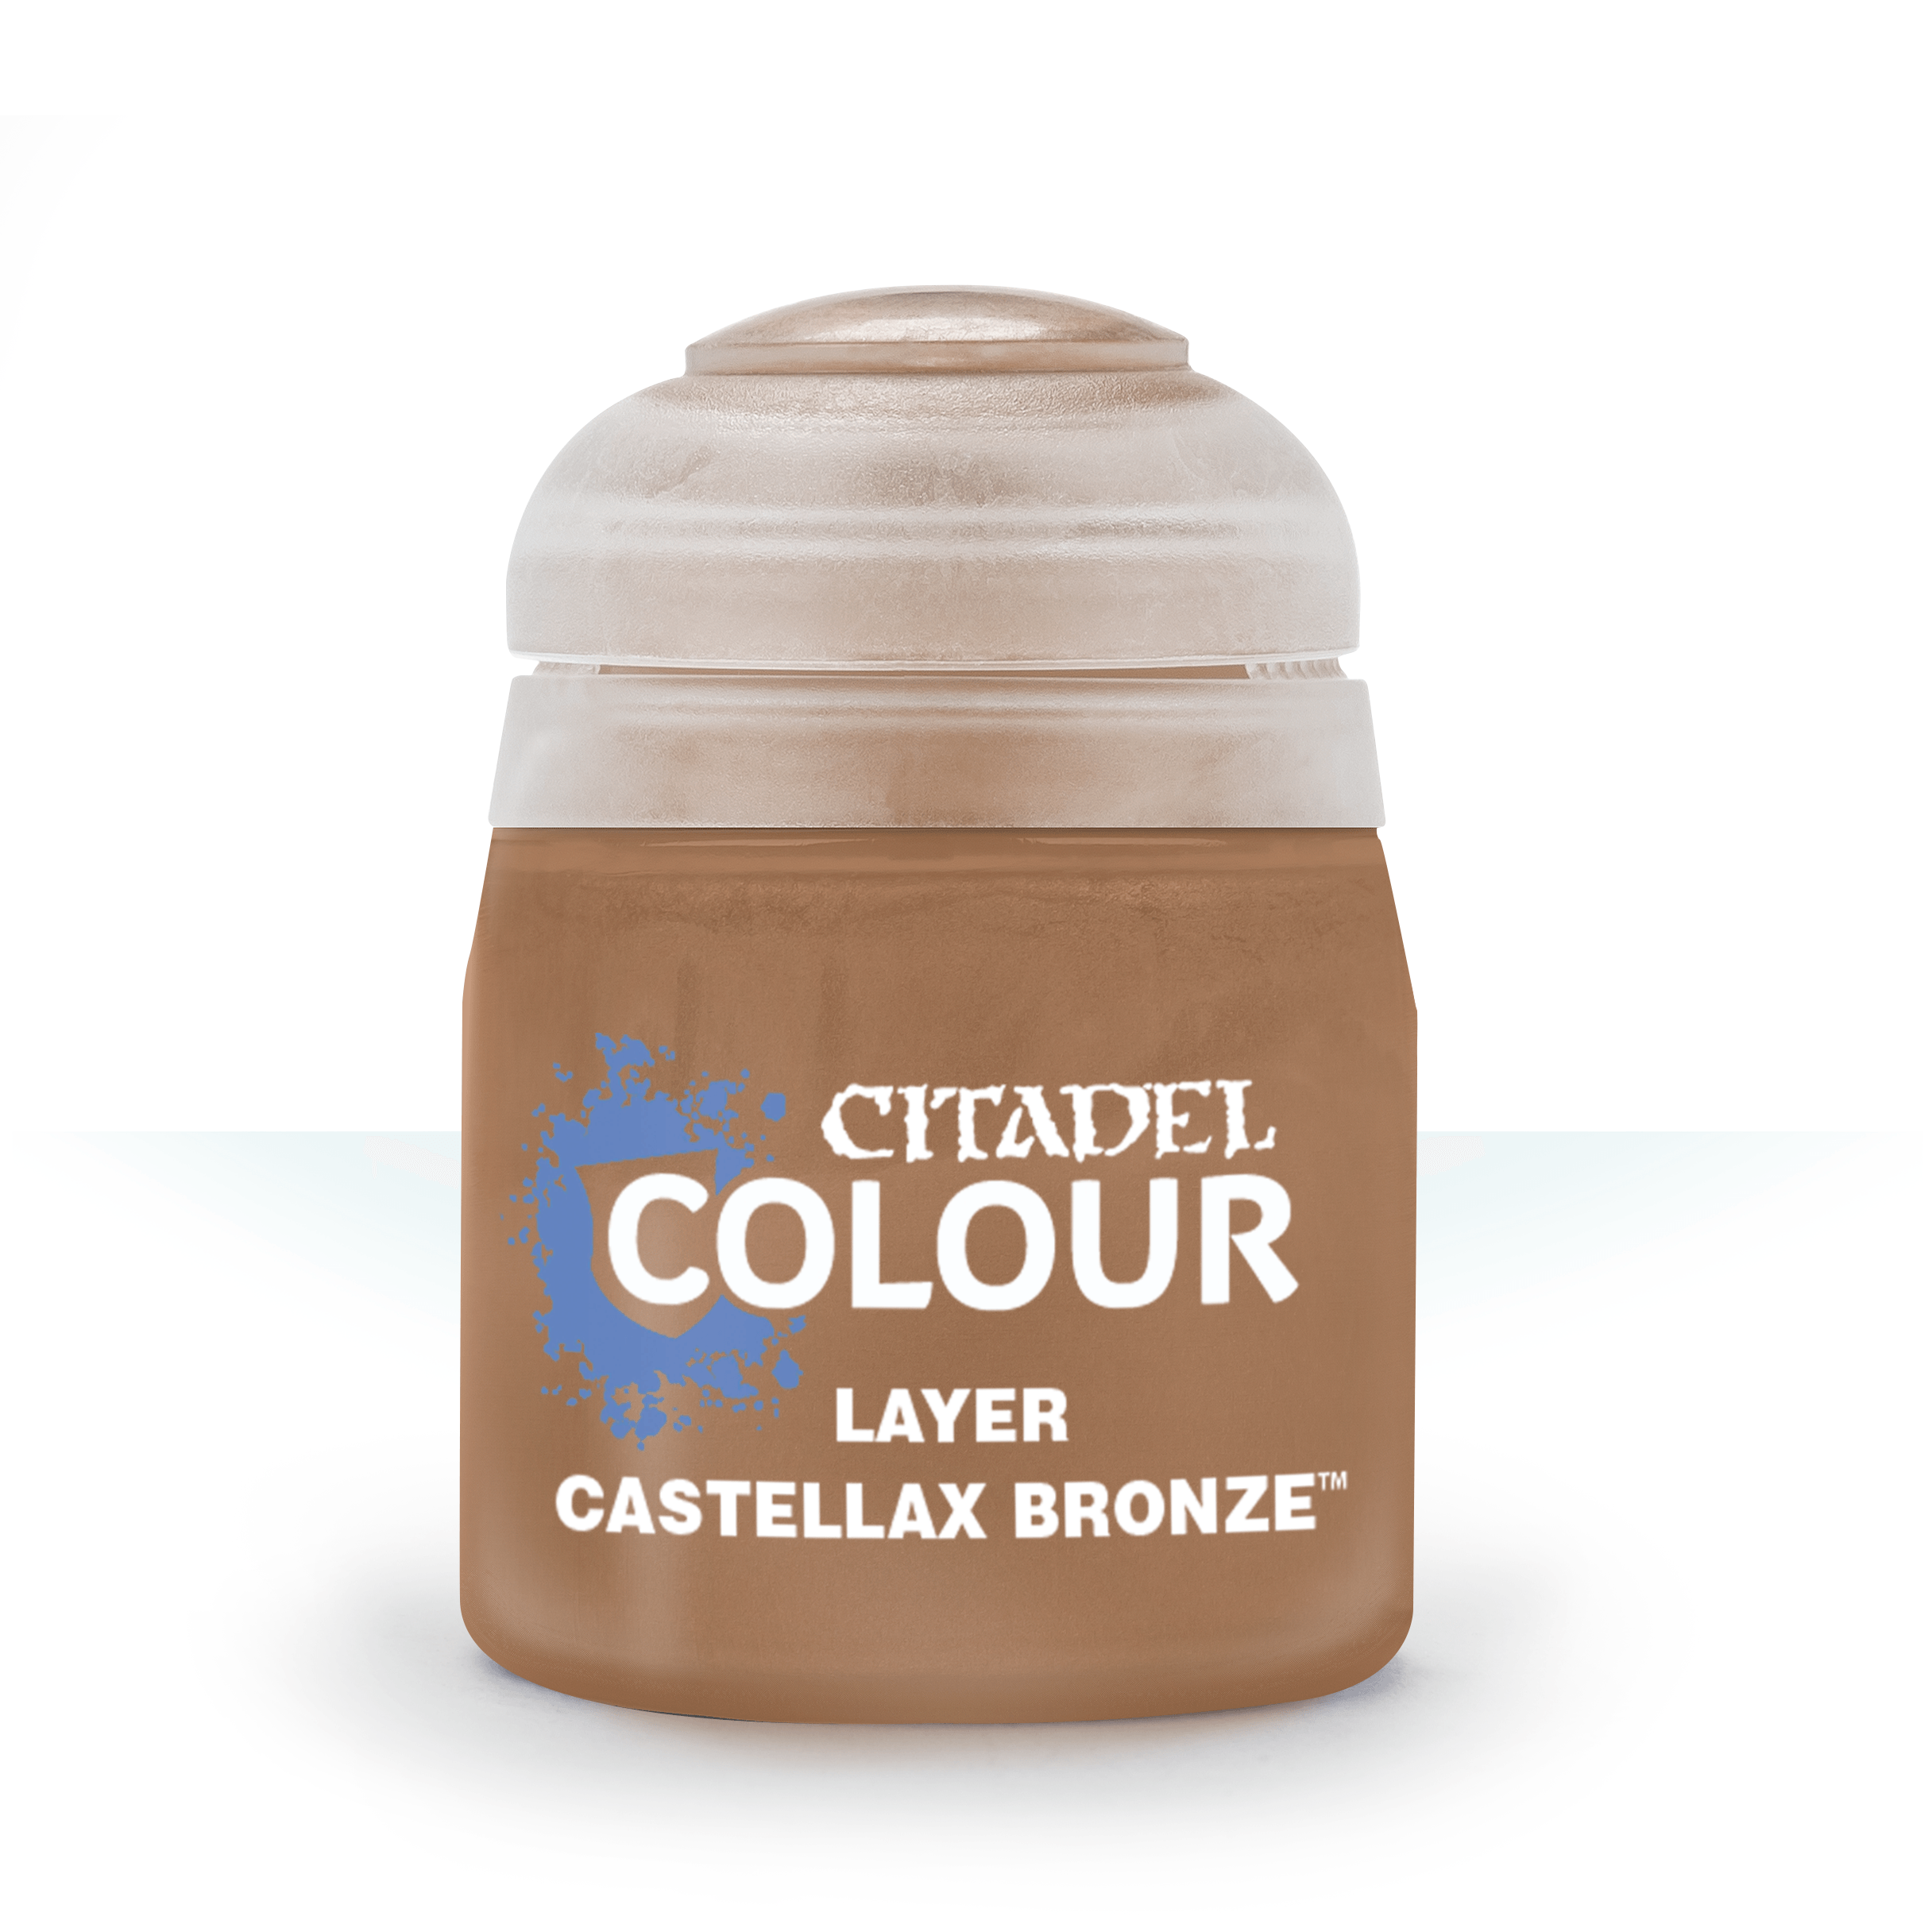 Layer Castellax Bronze - Citadel Colour